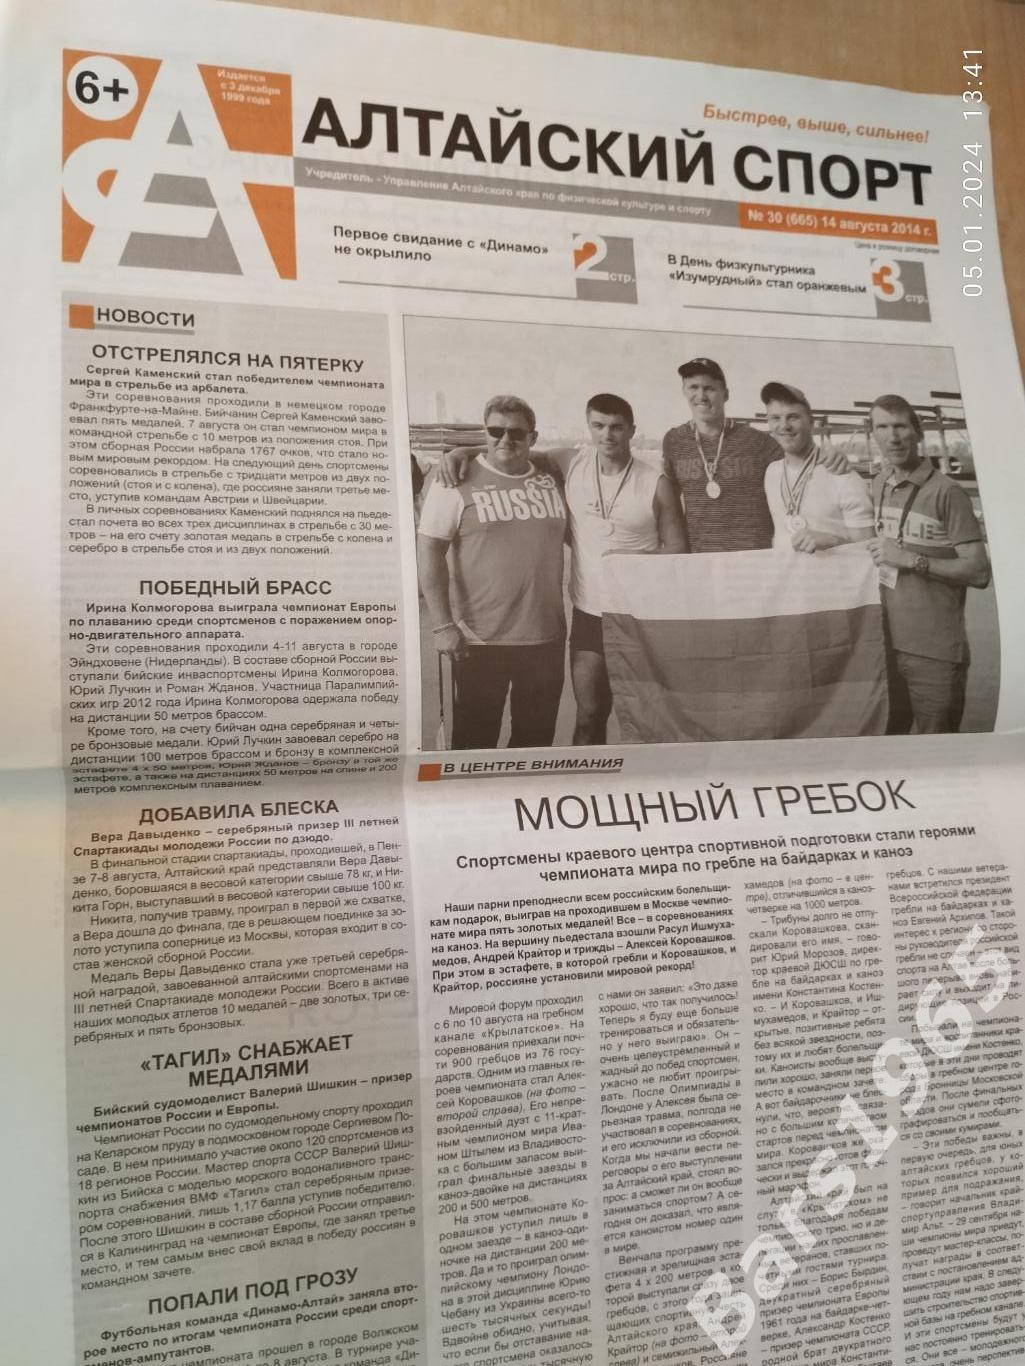 Алтайский спорт № 30 (665) 14 августа 2014